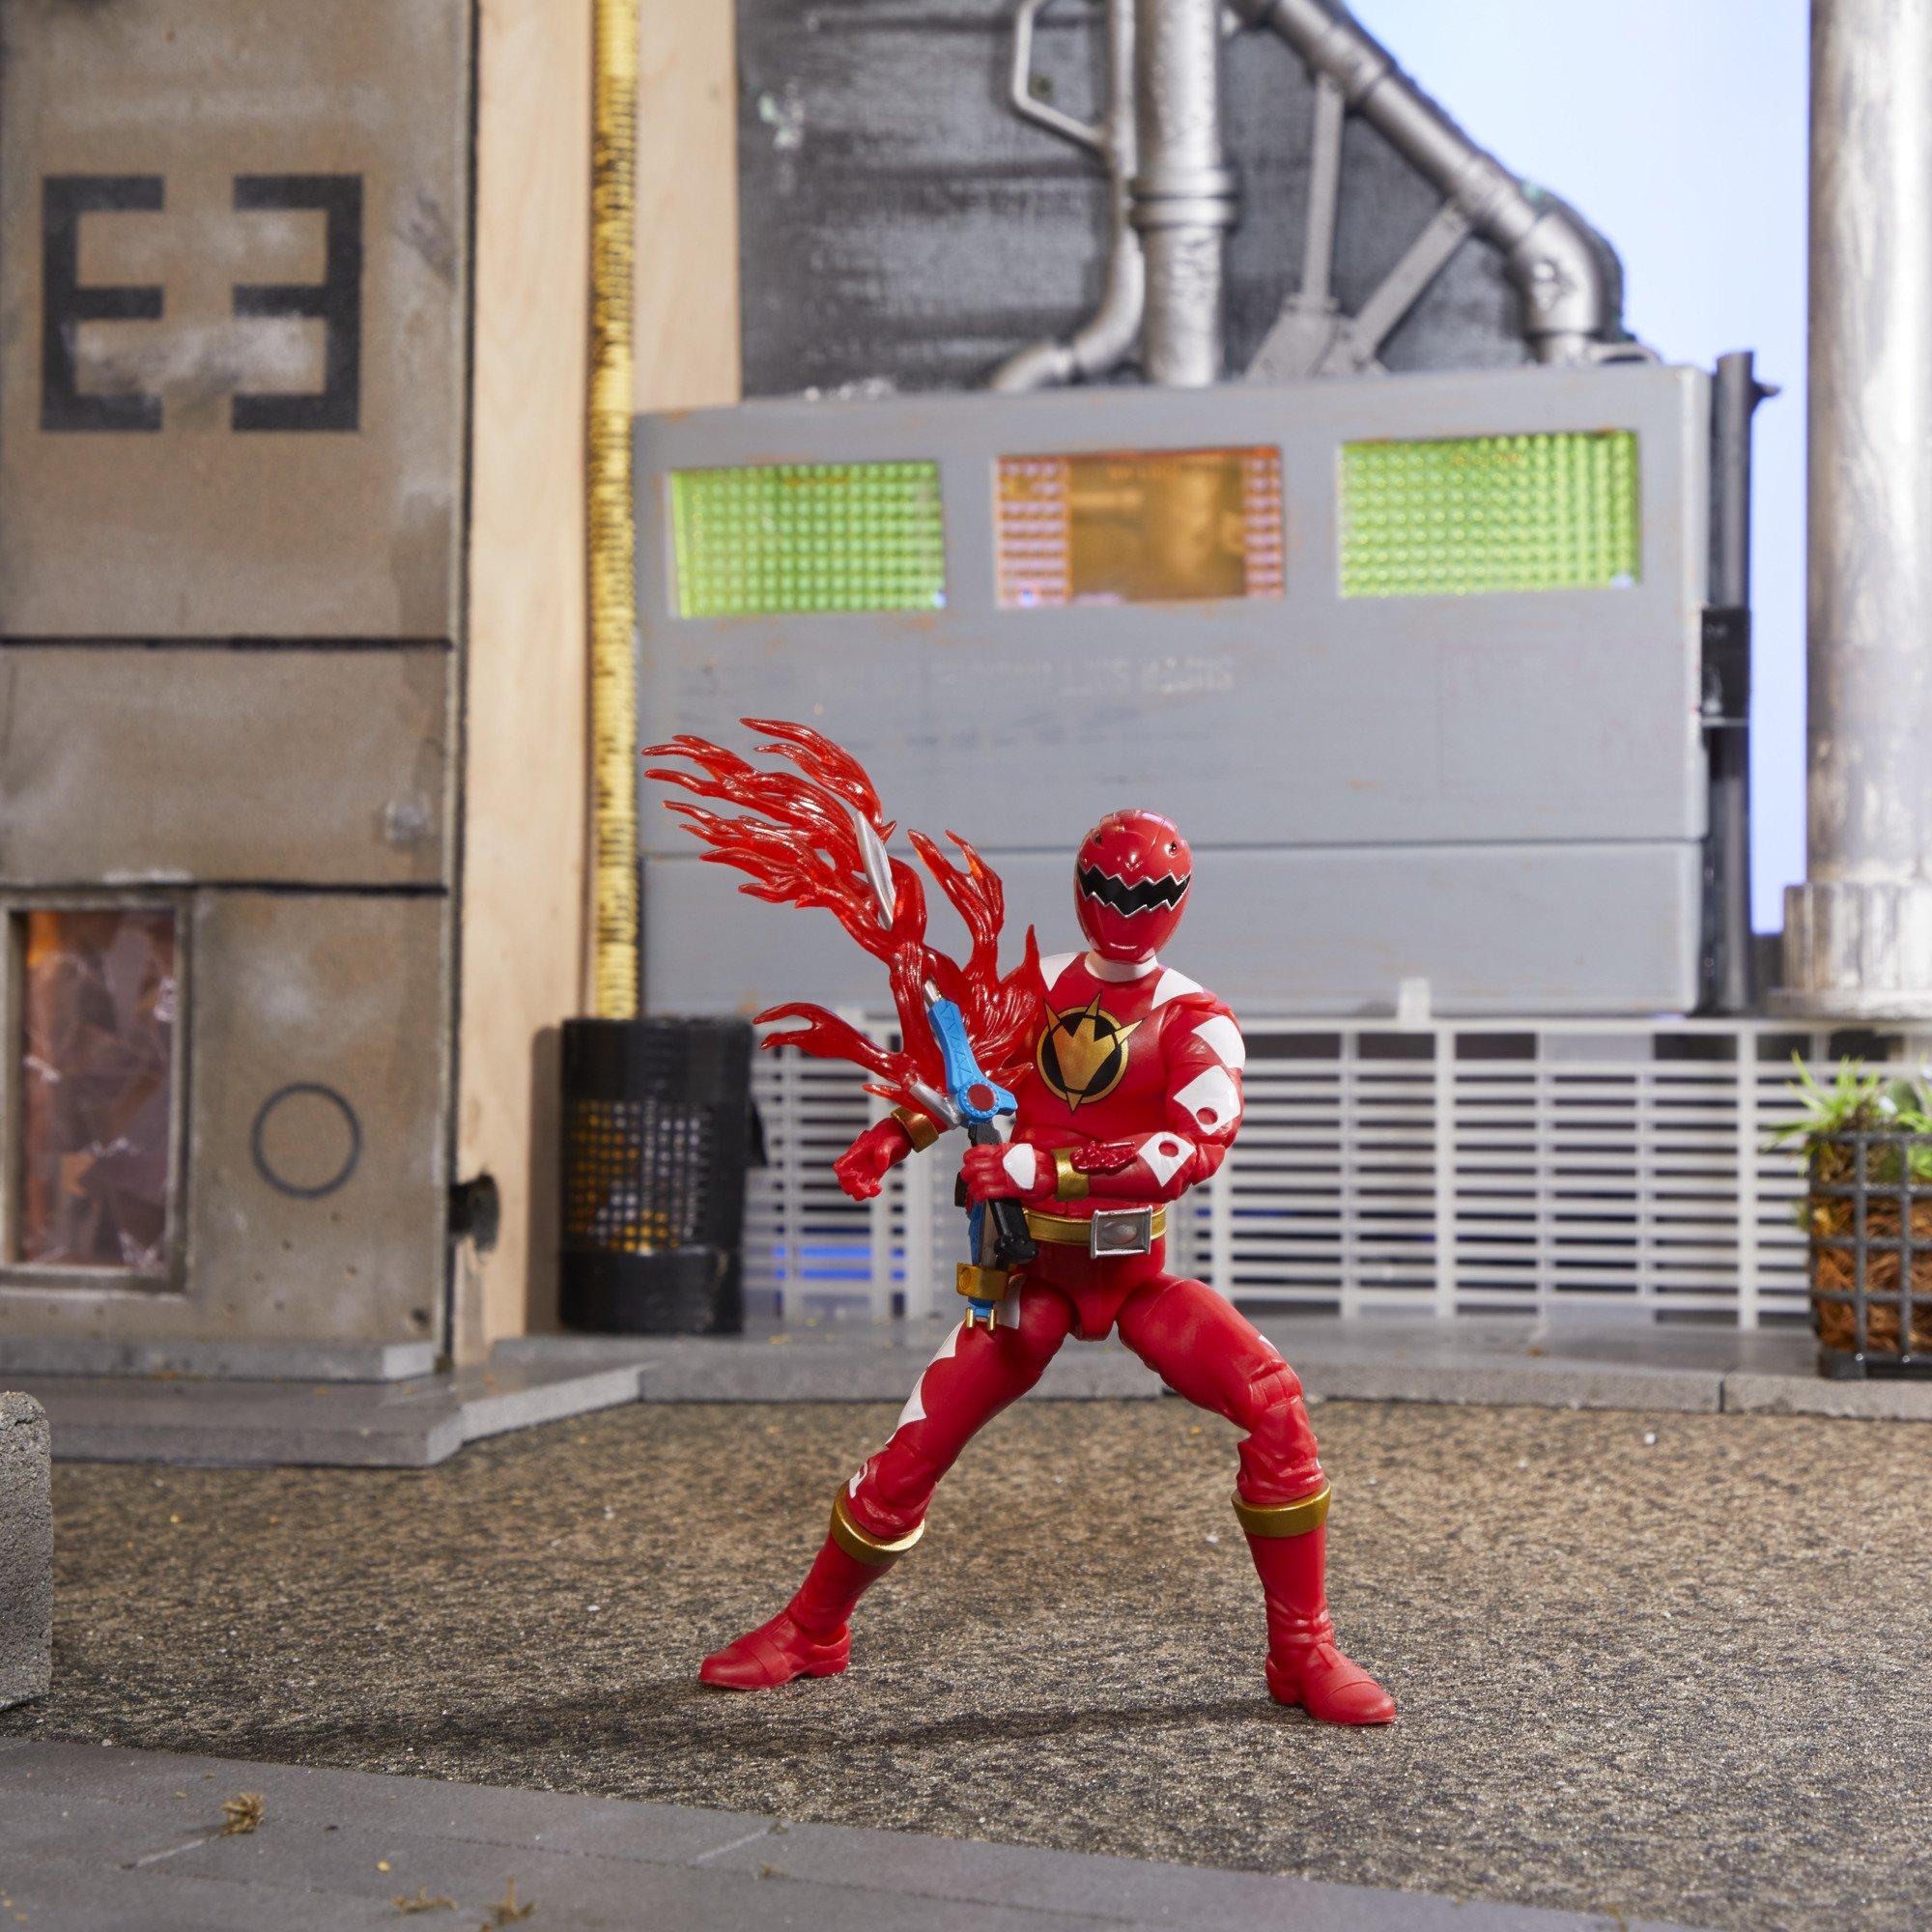 Hasbro Power Rangers Lightning Collection Dino Thunder Red Ranger 6-in Action Figure